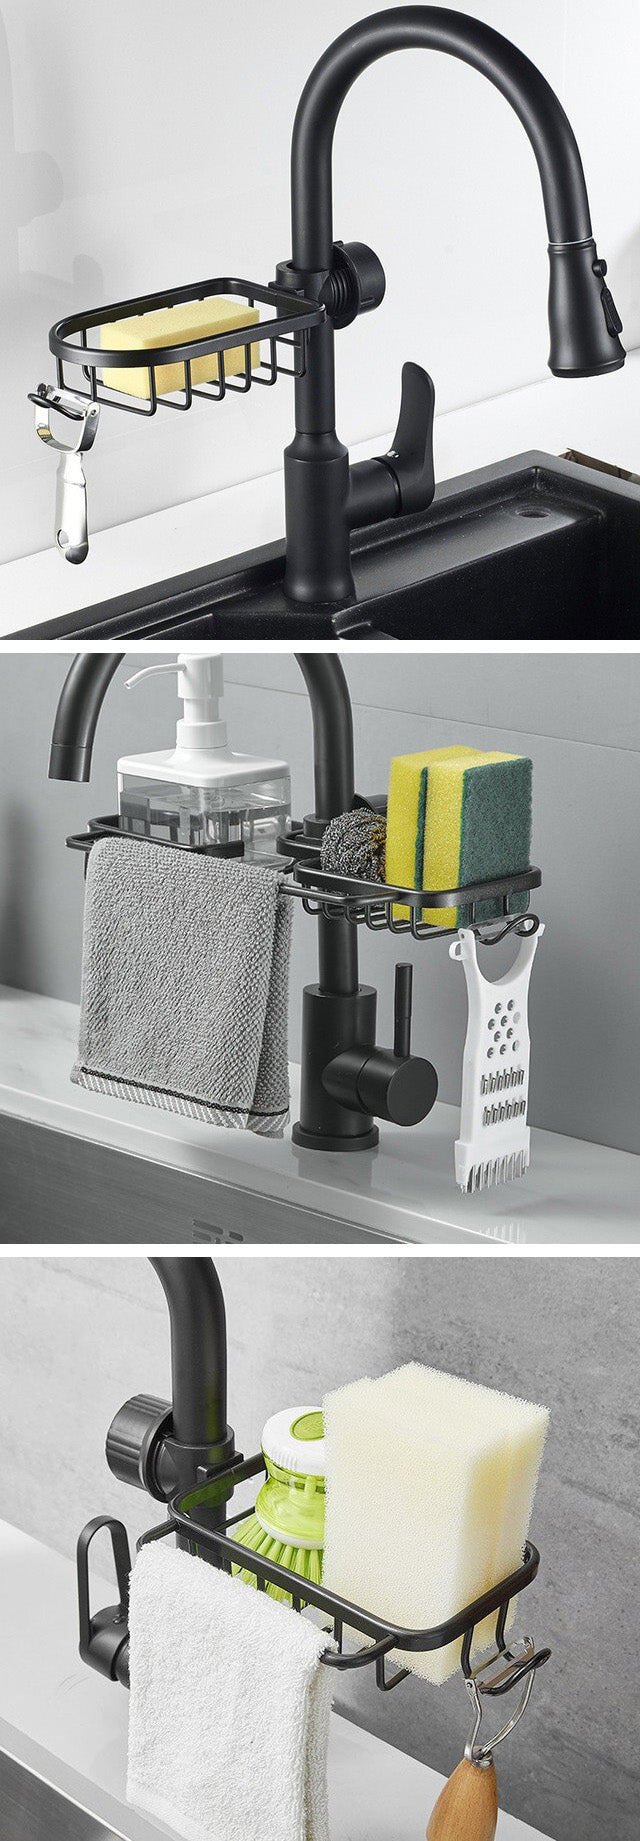 Kitchen Sink Organizer Faucet Rack For Sponge Scrubber Soap Holder Washroom Sink Cosmetics Storage Basket Shelf Rack Bathroom Accessories